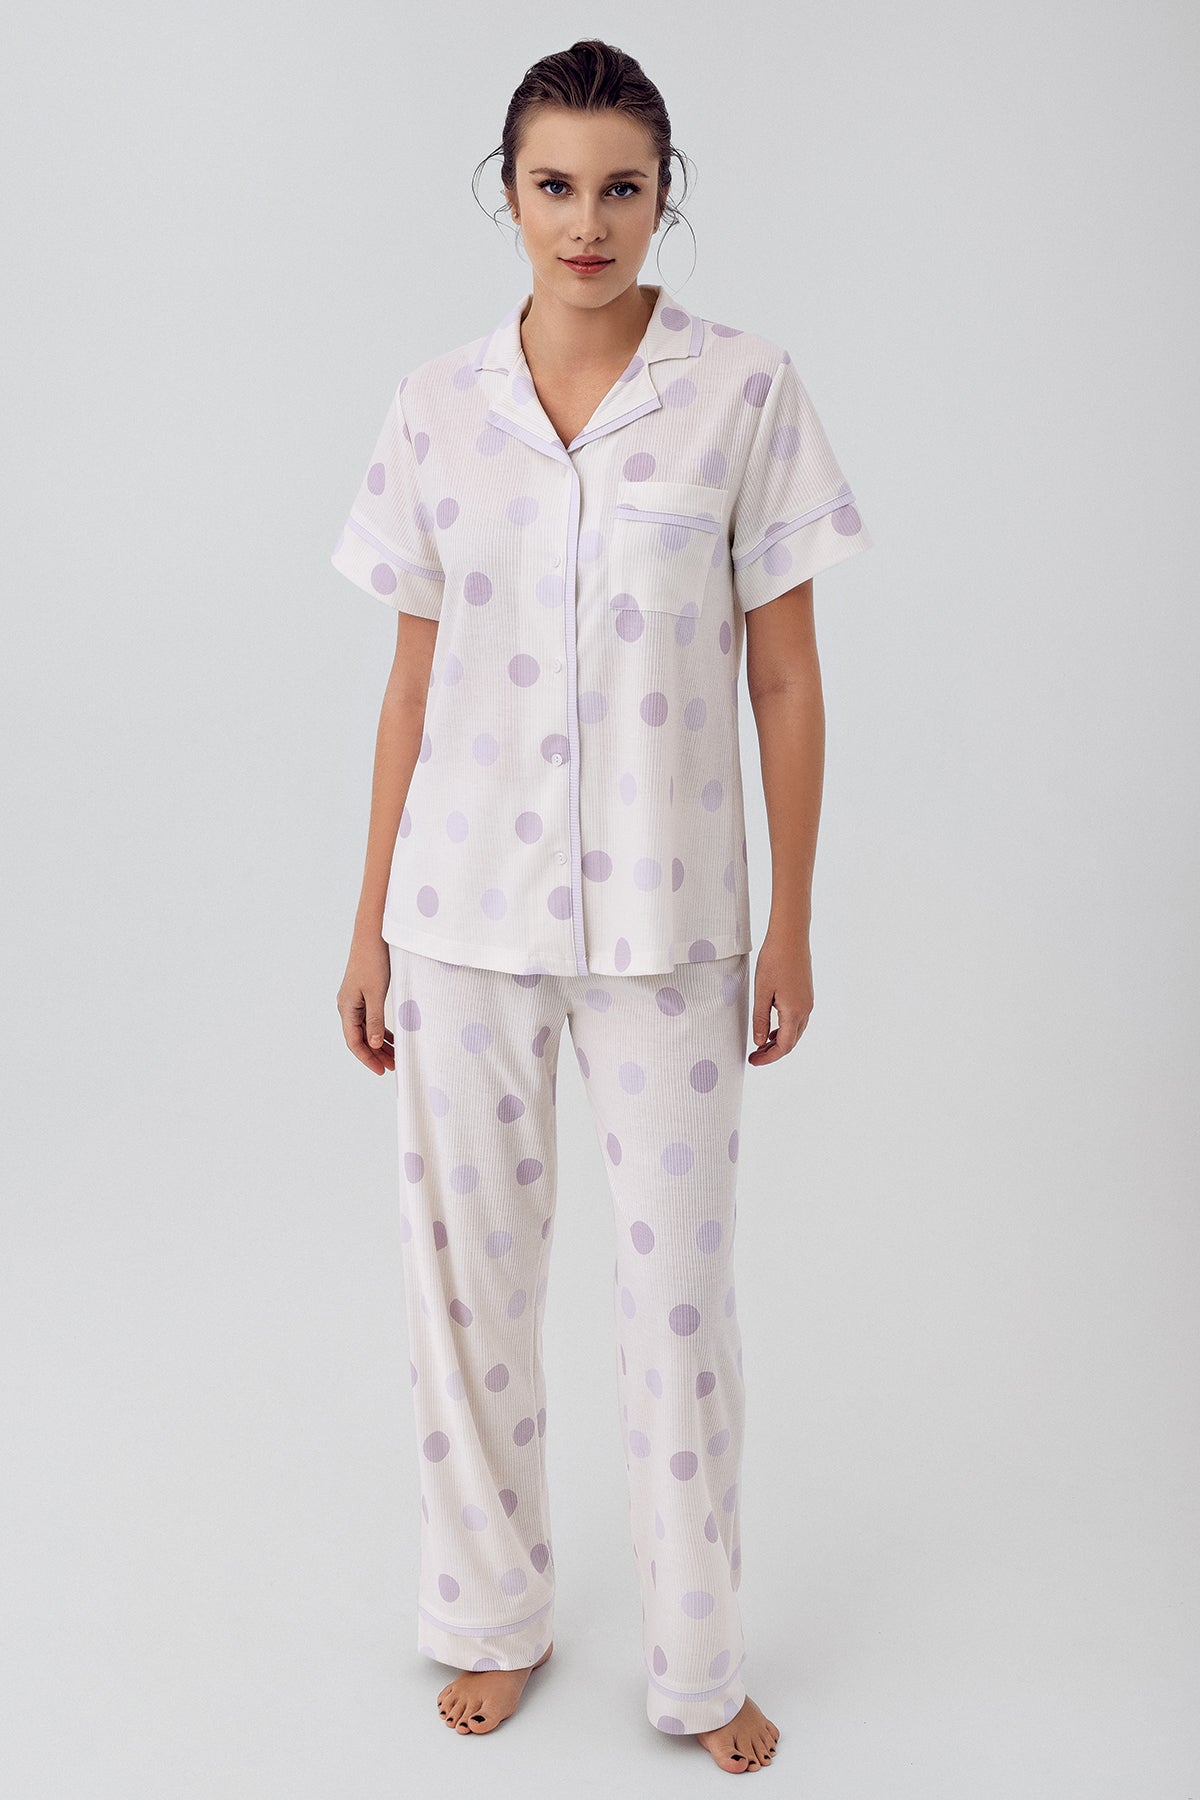 Shopymommy 16200 Polka Dot Maternity & Nursing Pajamas Lilac